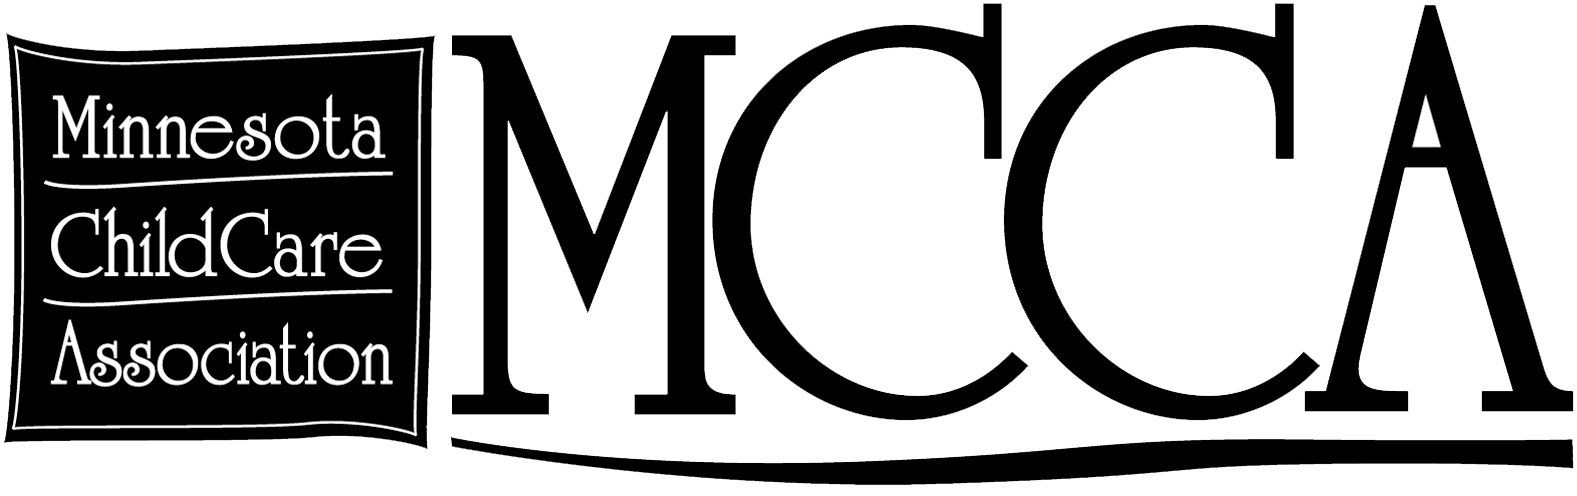 Minnesota Child Care Association logo